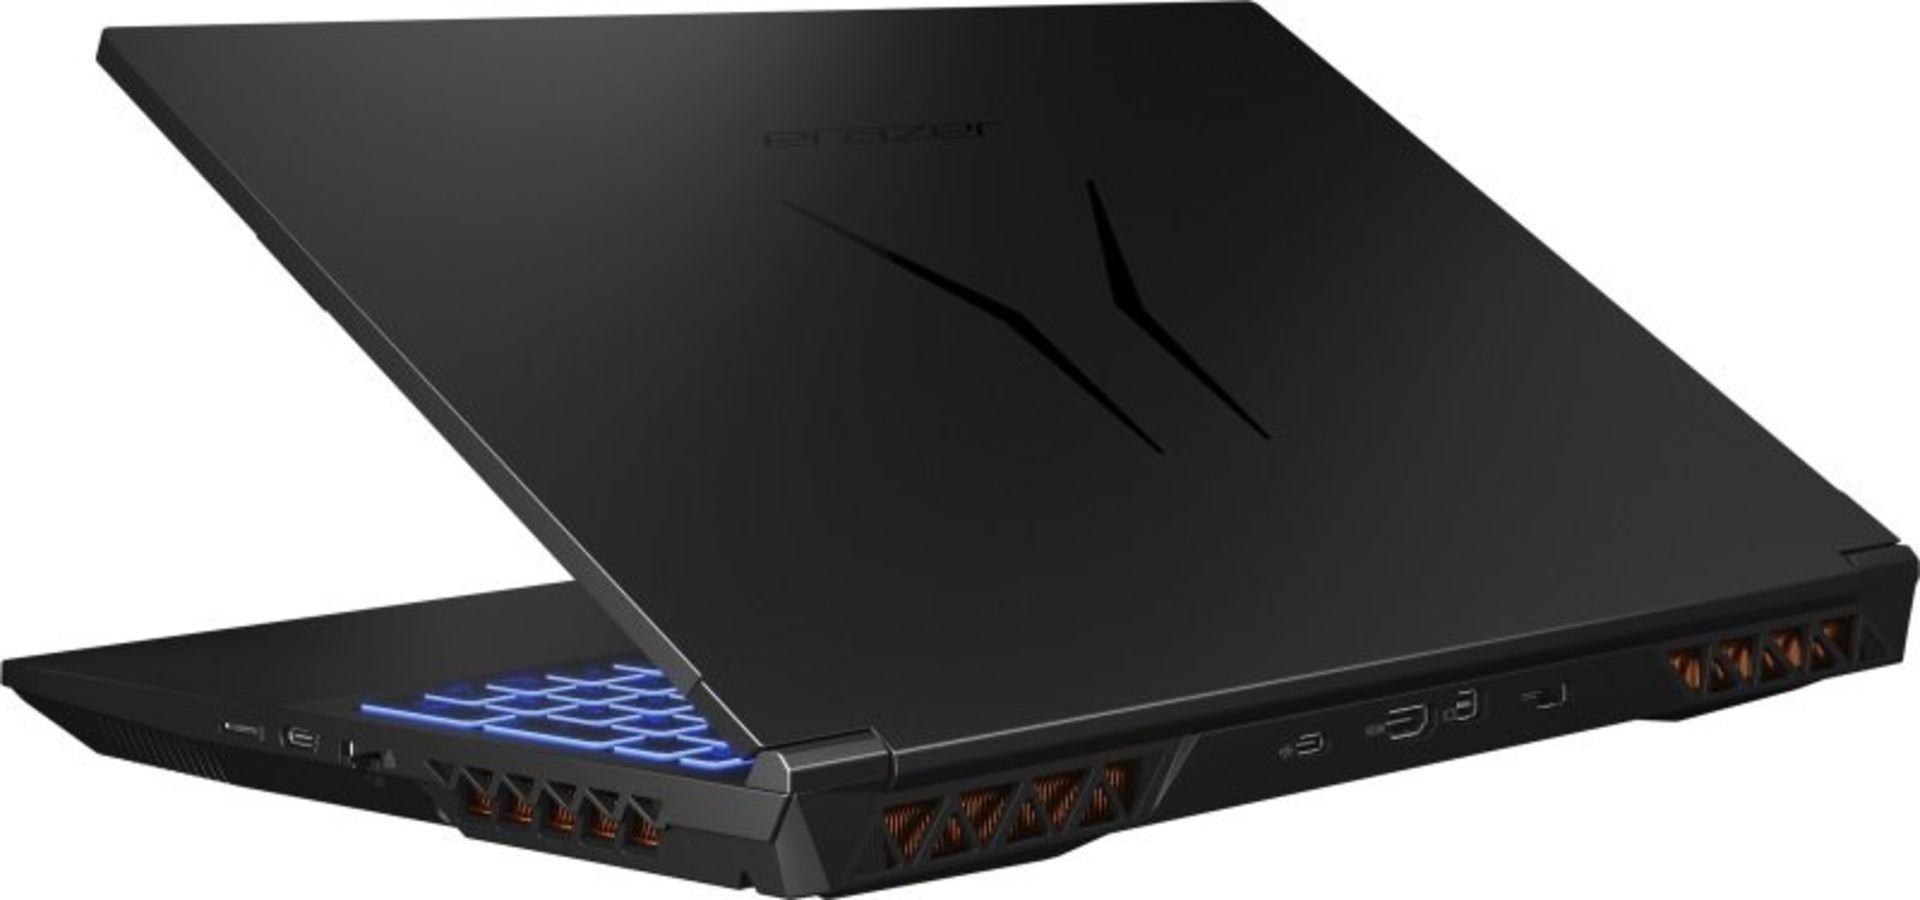 NEW & BOXED MEDION Erazer Deputy P40 - 62532 Gaming Laptop. RRP £1099. 15.6" 144hz FHD Screen, Intel - Image 6 of 6